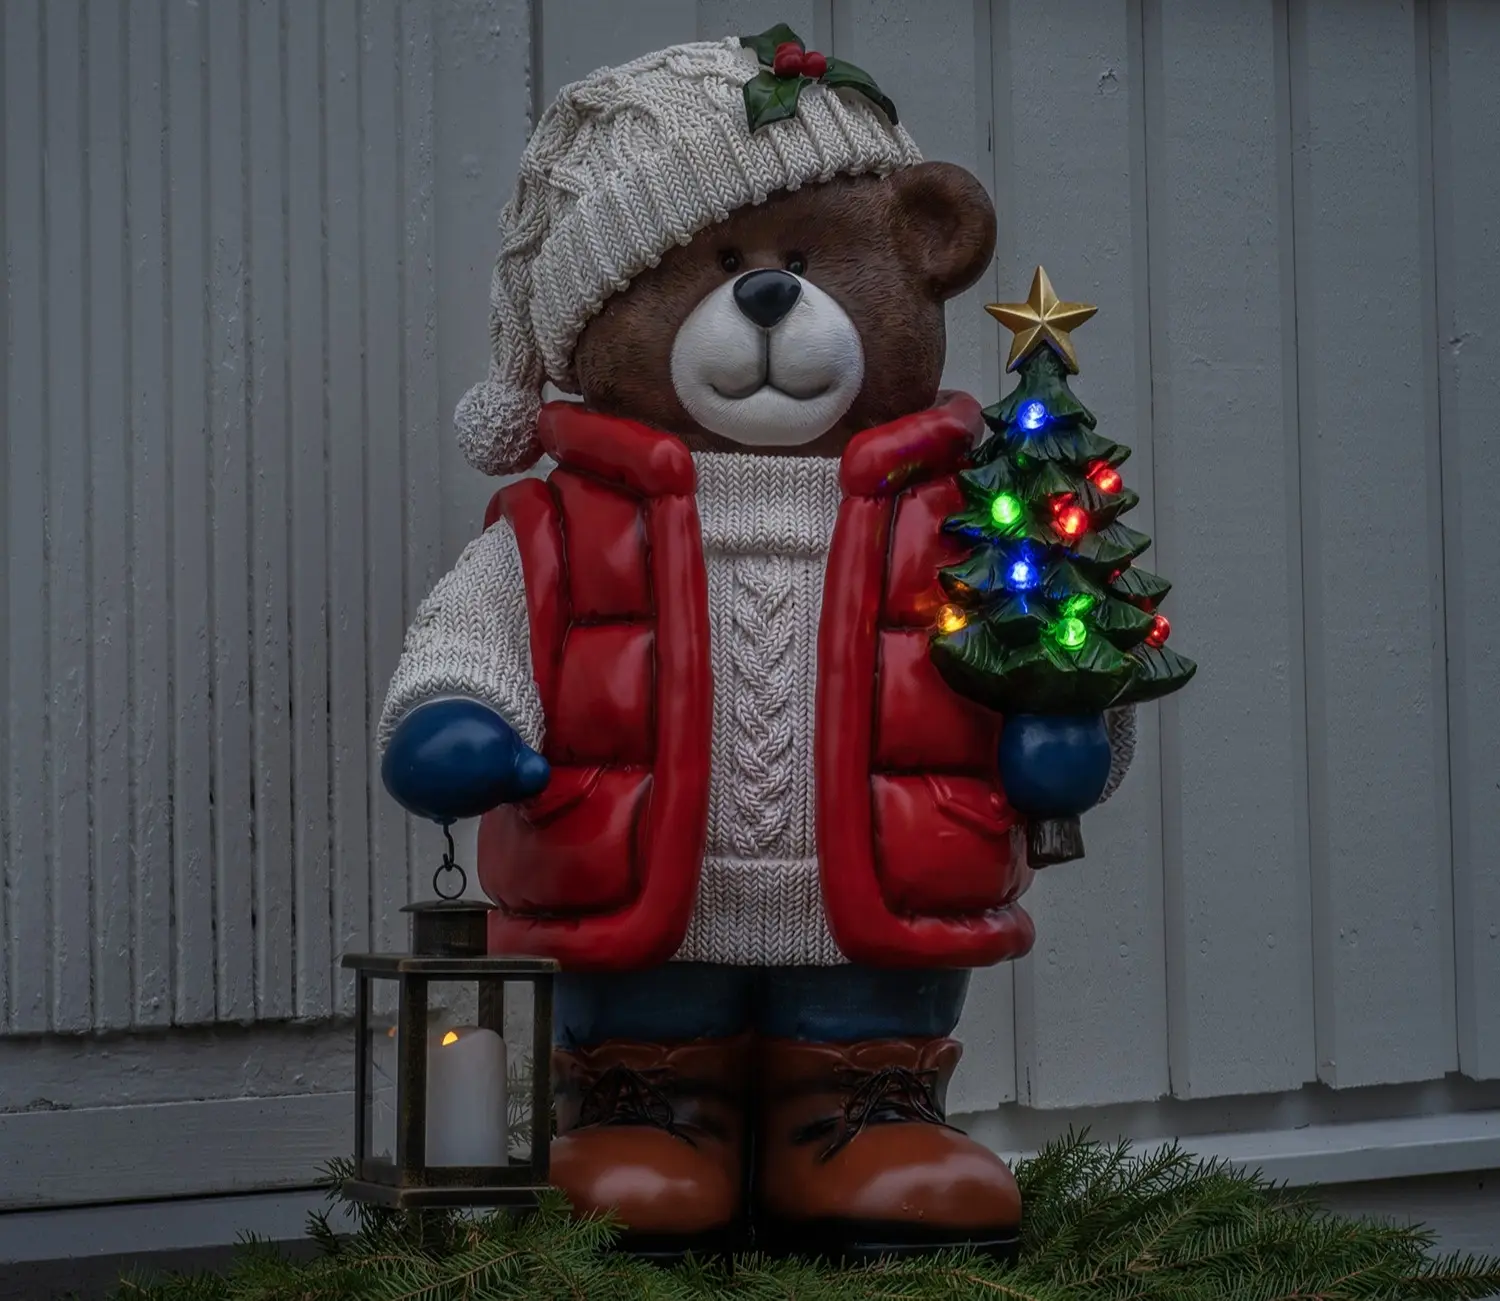 Konstsmide Light Up Large Teddy Bear